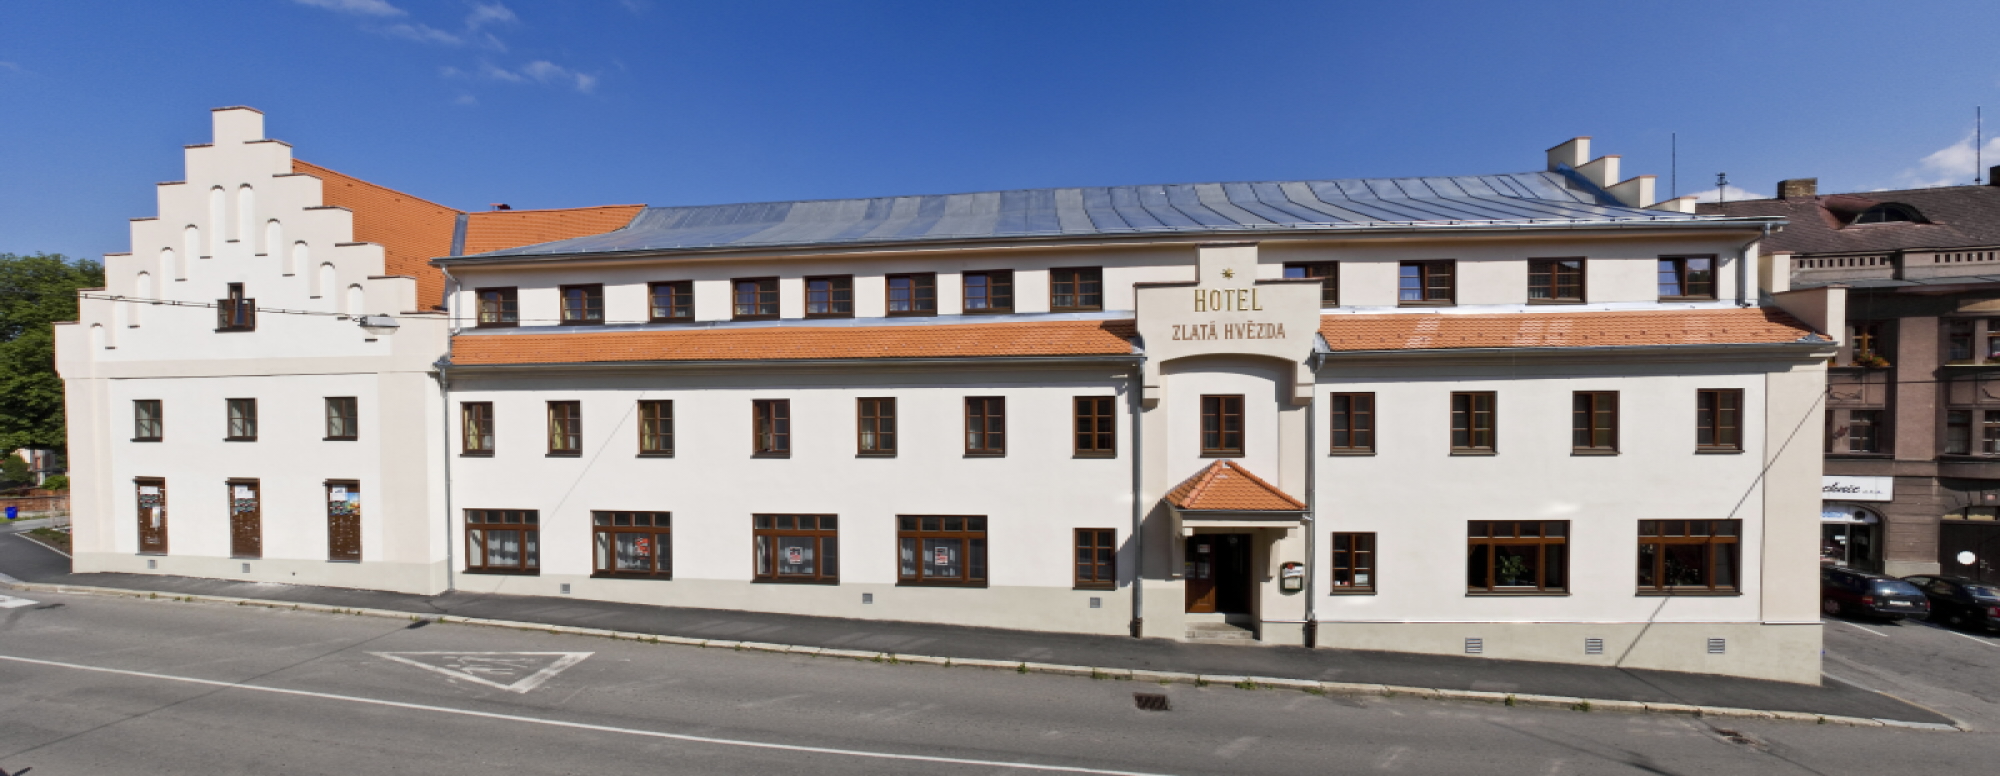 Rekonstrukce hotelu Zlatá hvězda ve Vimperku